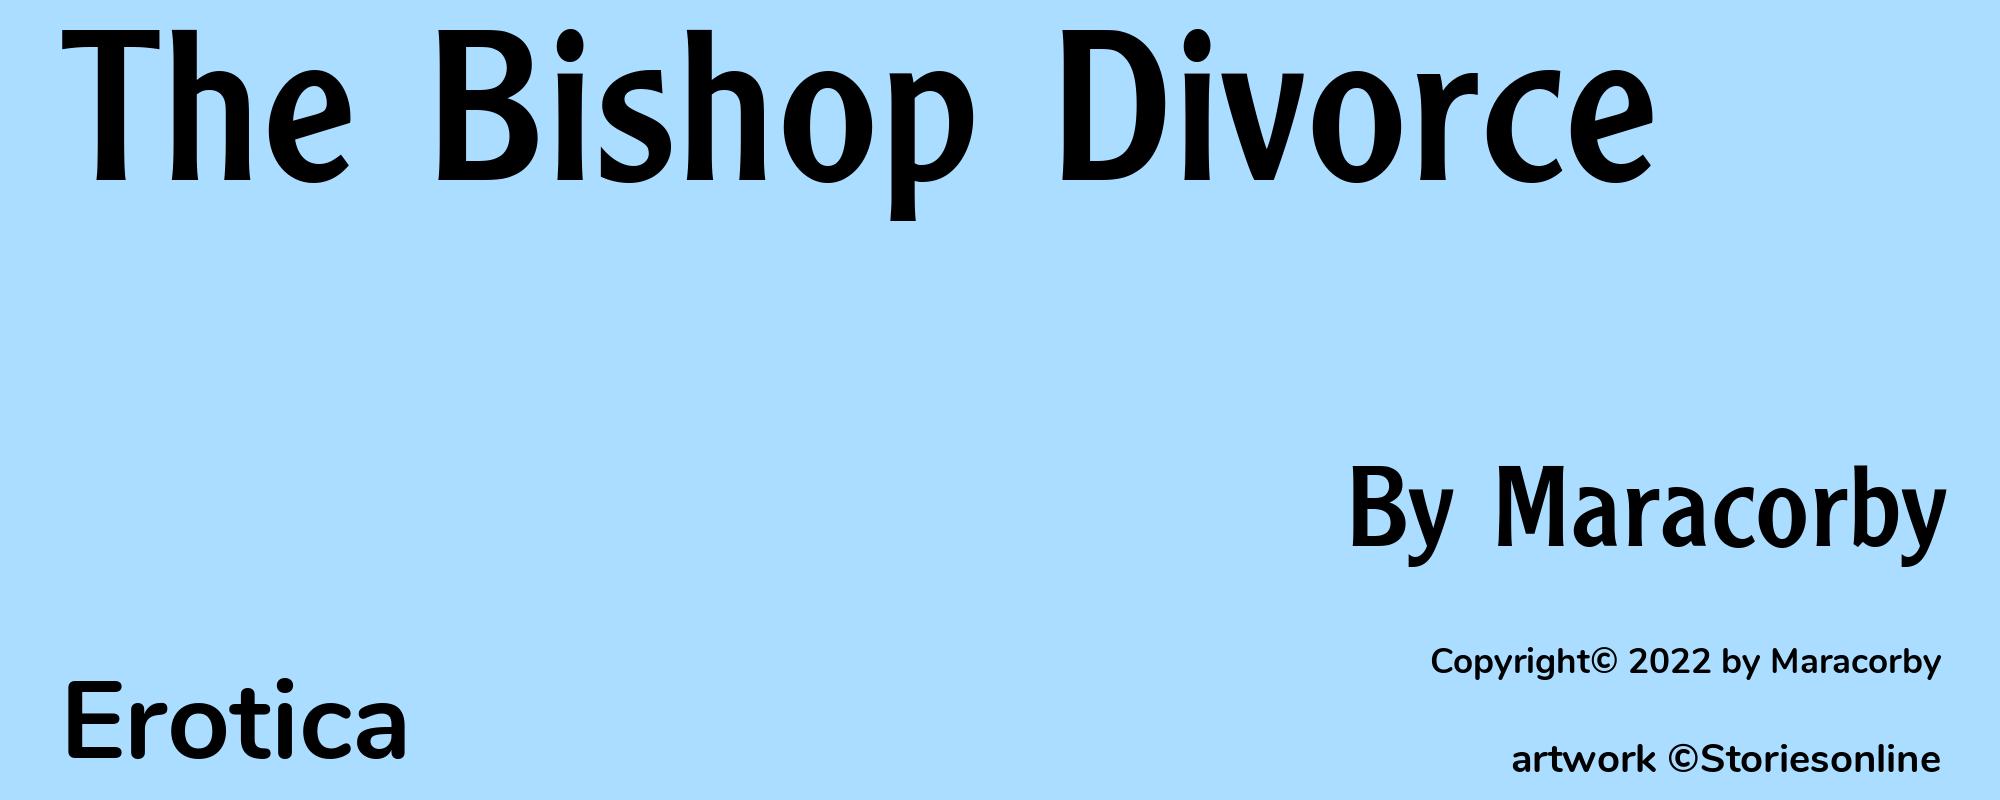 The Bishop Divorce - Cover